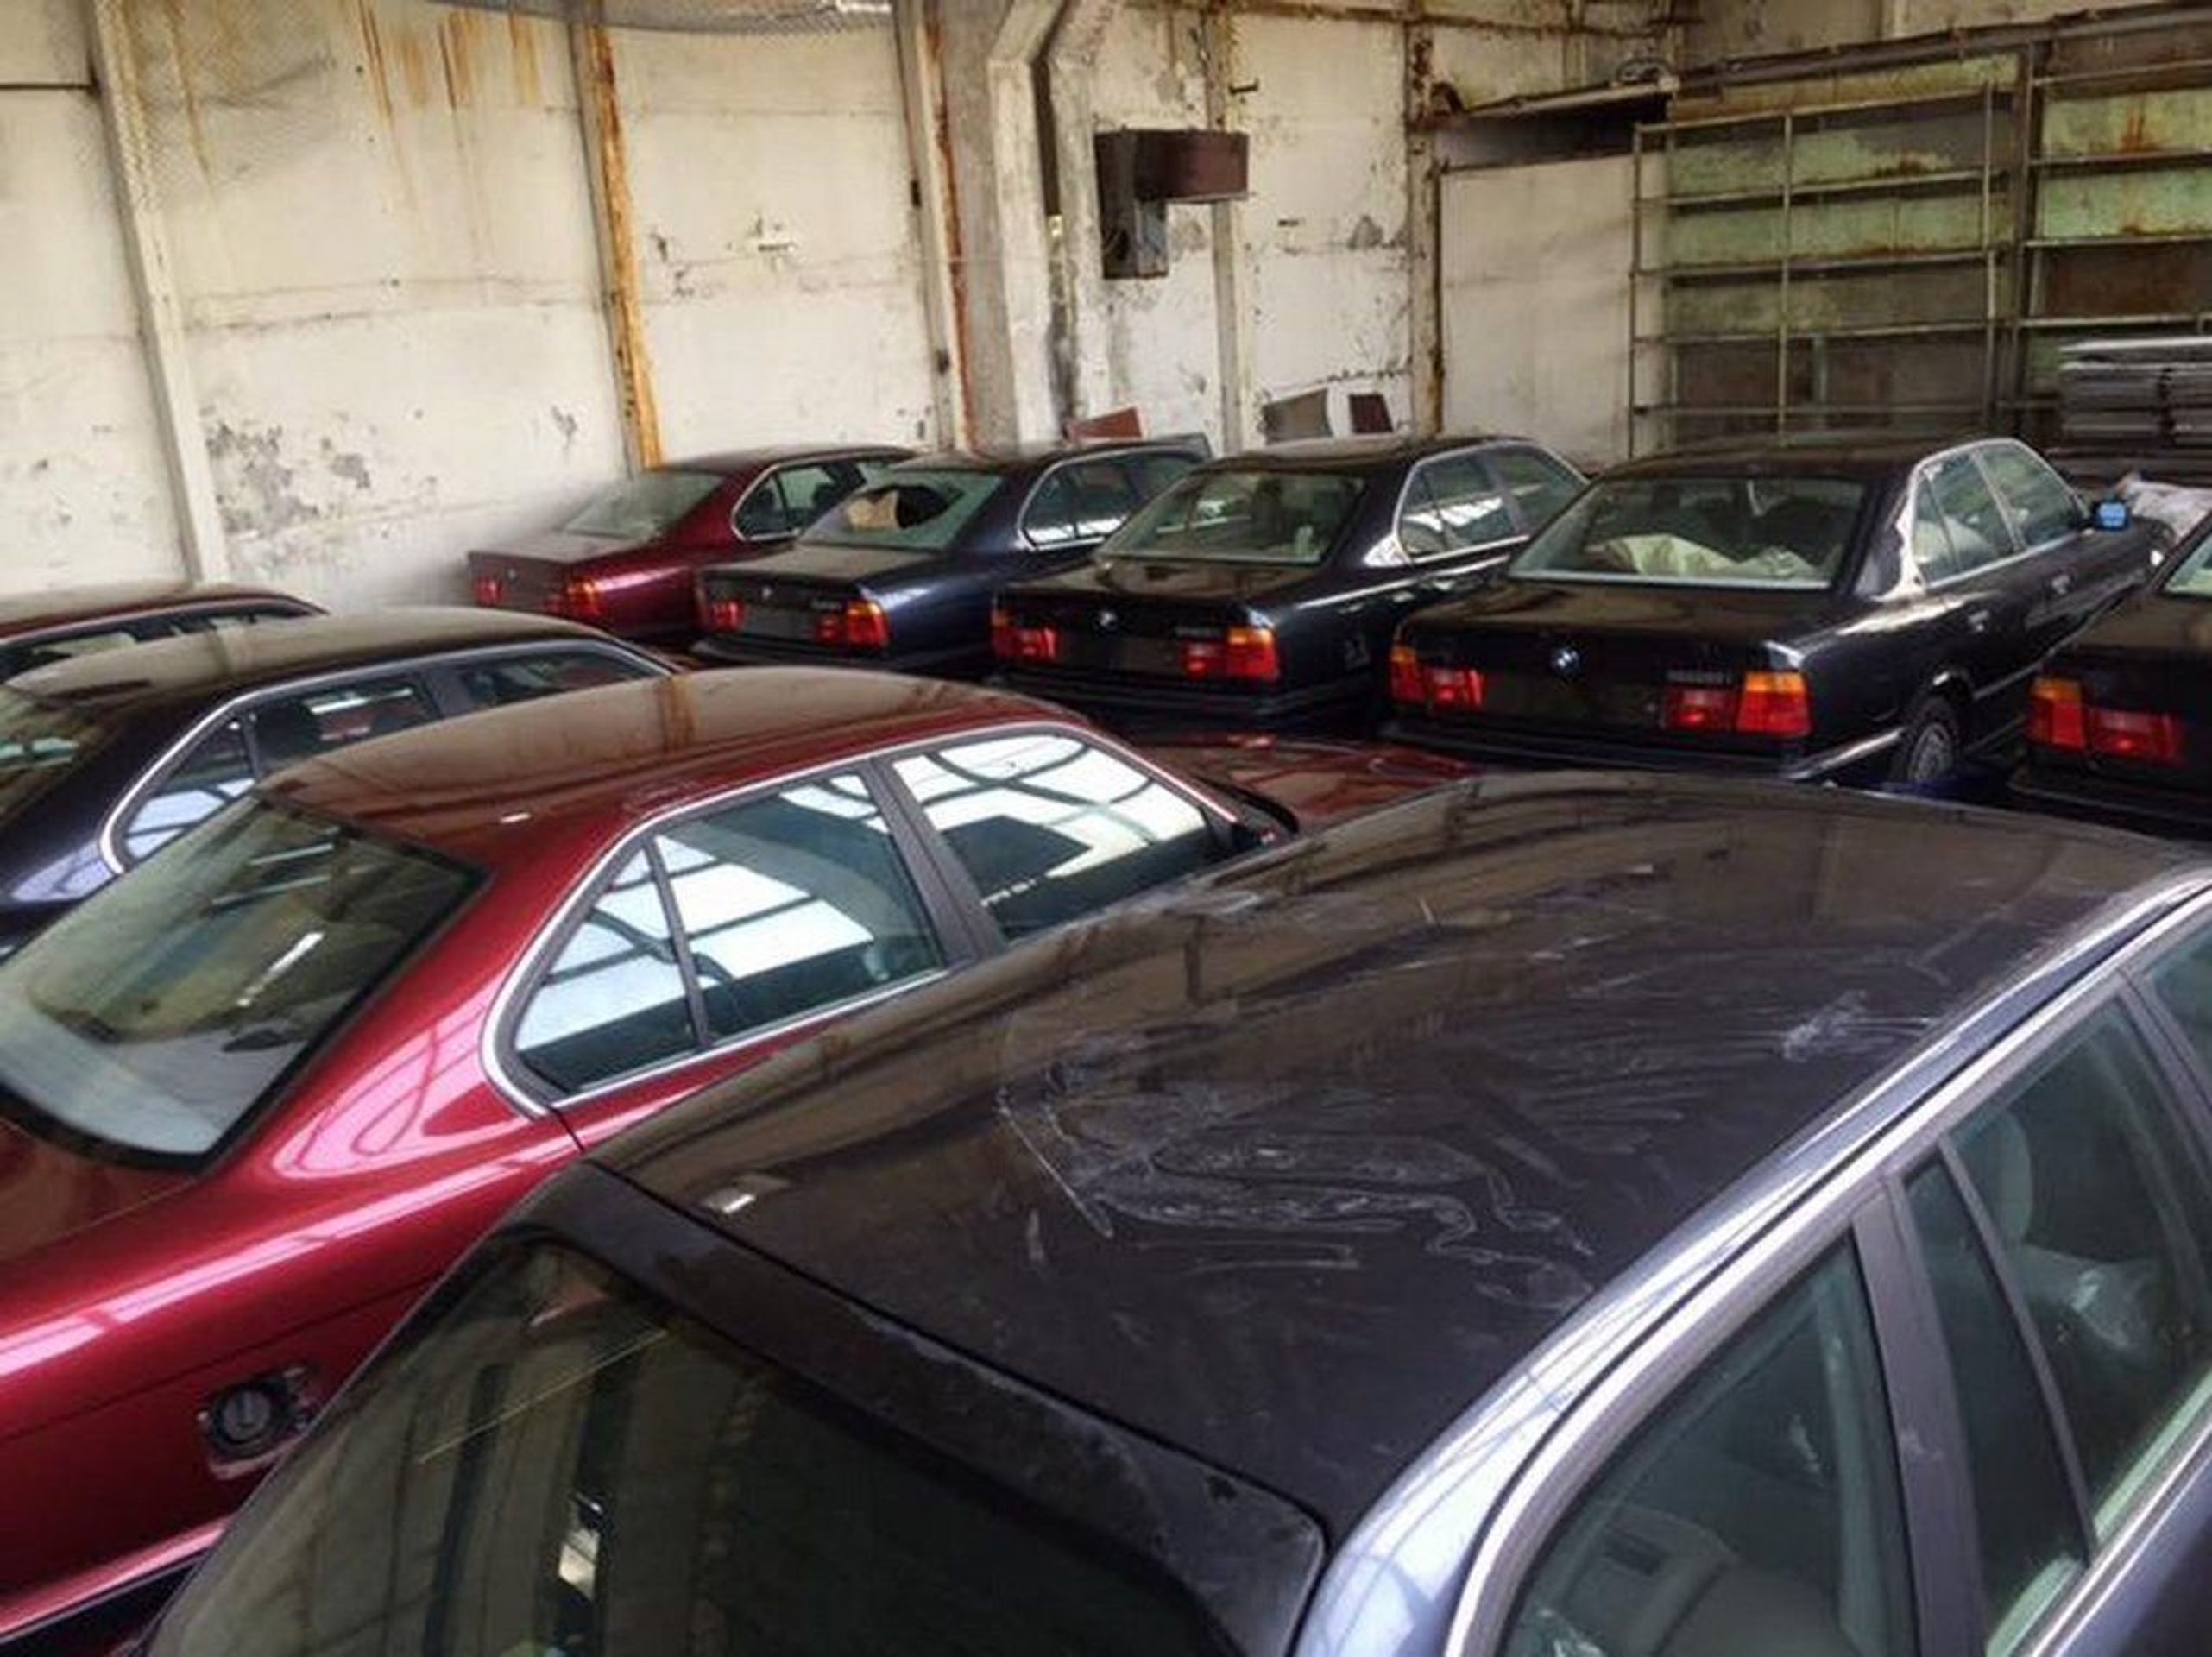 Sklad 25 let ukrýval 11 vozů BMW řady 5 - 36 - Fotogalerie: V bulharském skladu se 25 let skrýval poklad (2/16)